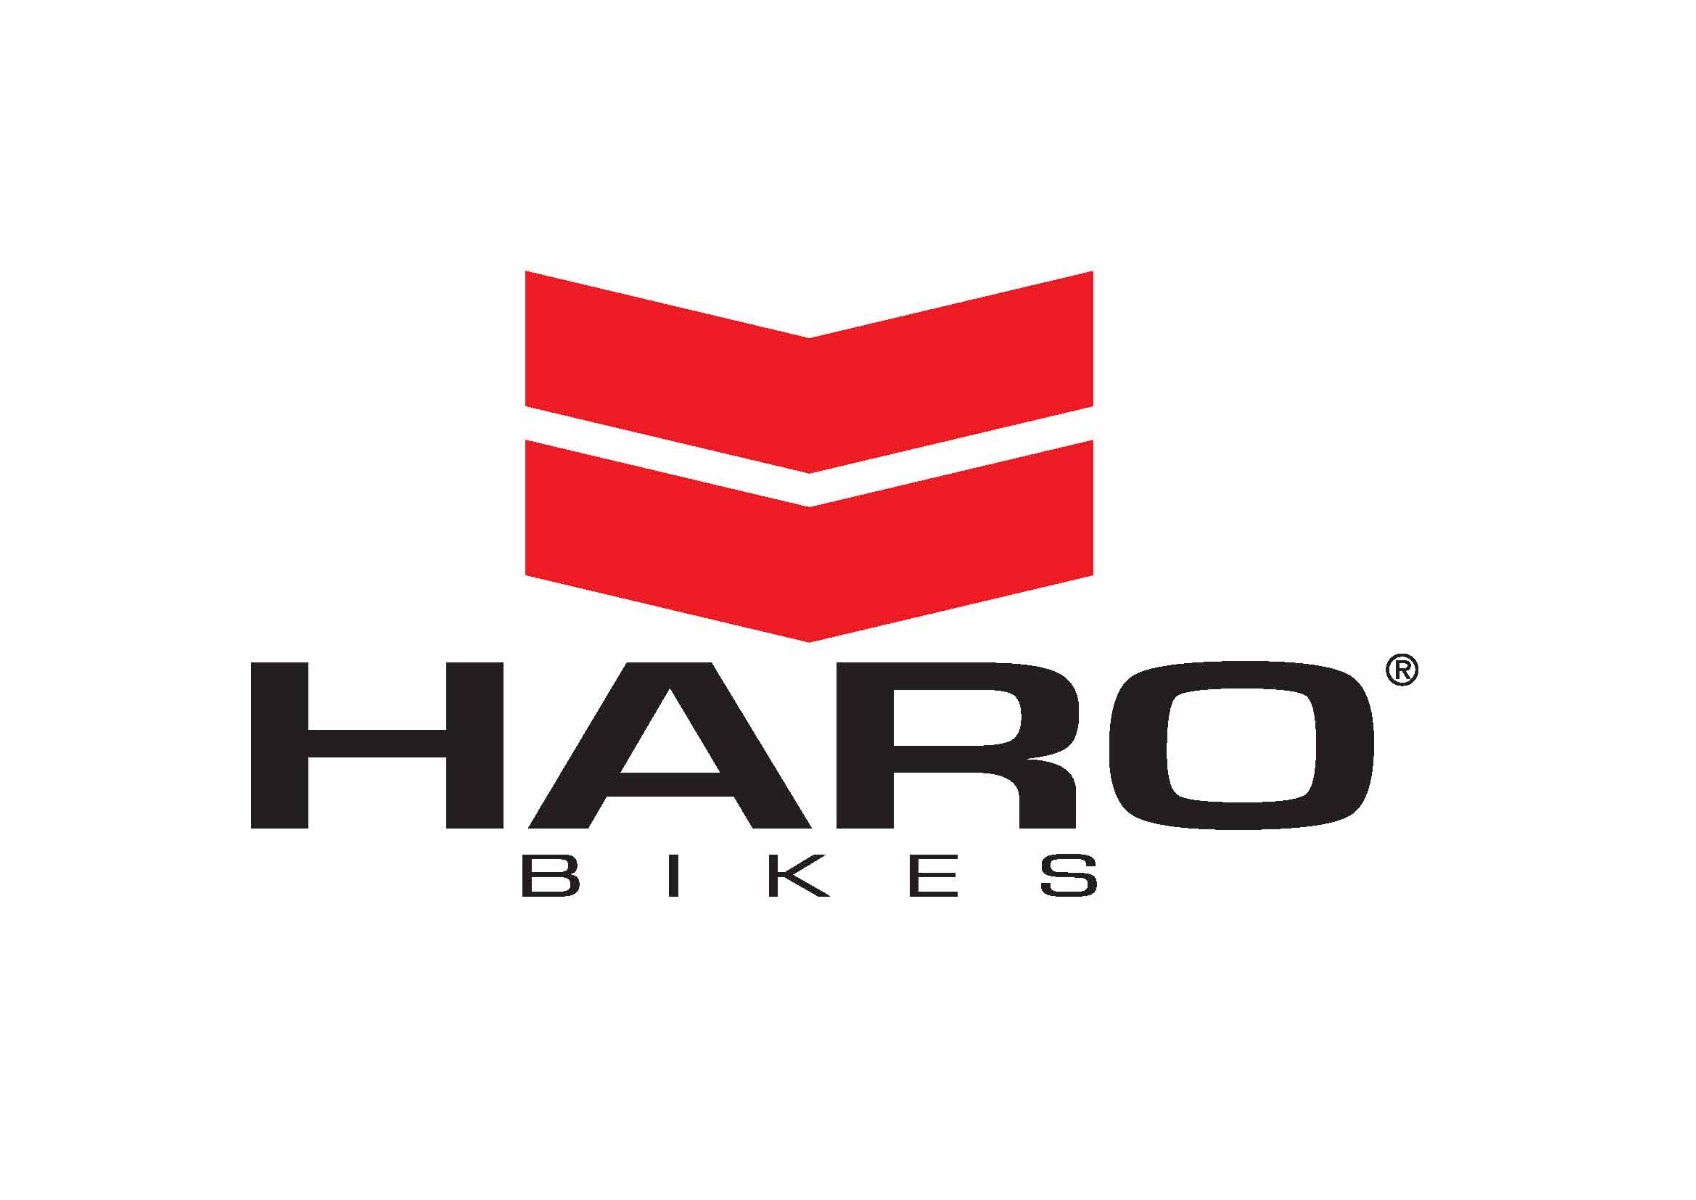 haro bikes logo